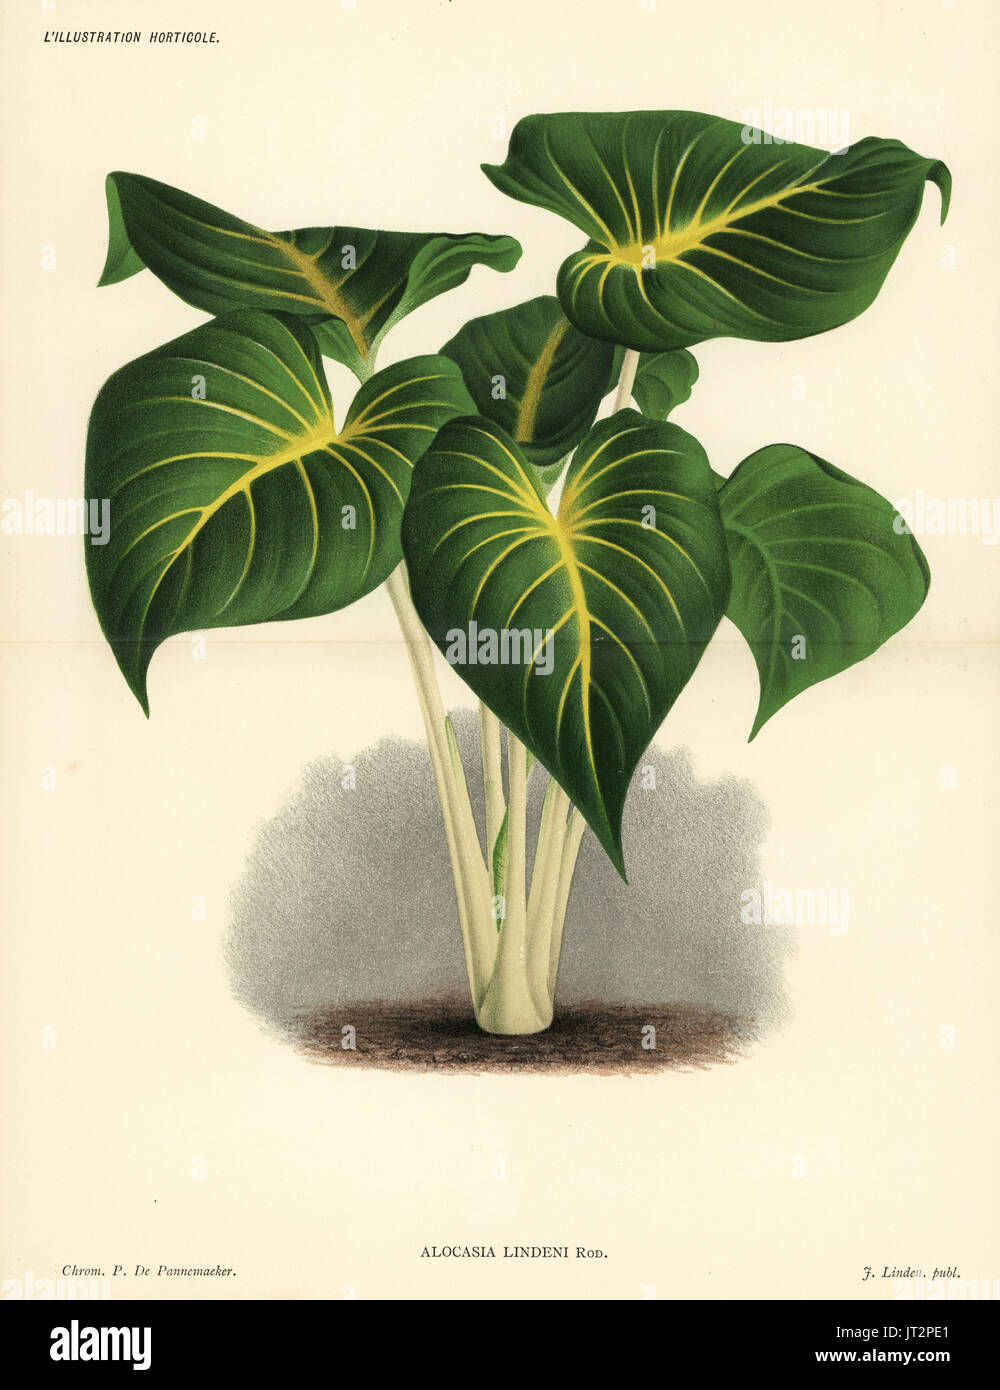 Homalomena lindenii (Alocasia lindeni). Chromolithograph by Pieter de Pannemaeker from Jean Linden's l'Illustration Horticole, Brussels, 1885. Stock Photo